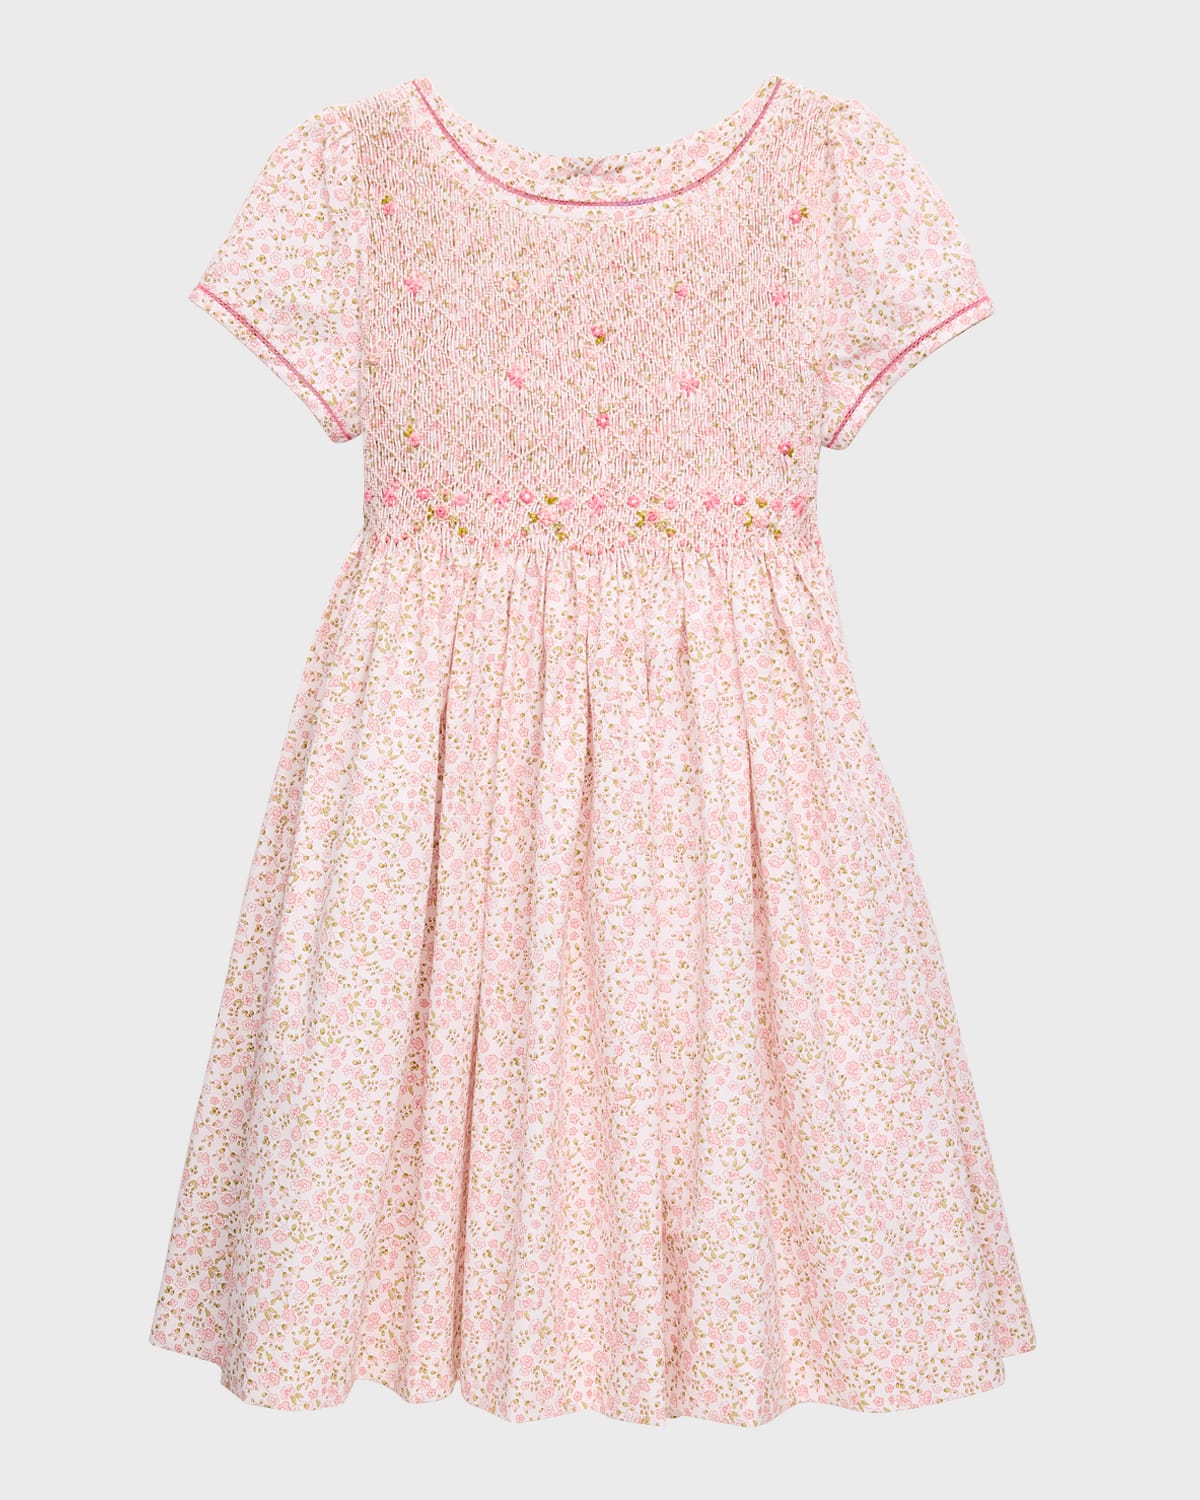 Luli & Me Kids' Girl's Wildflowers Smocked Cotton Dress In Pink